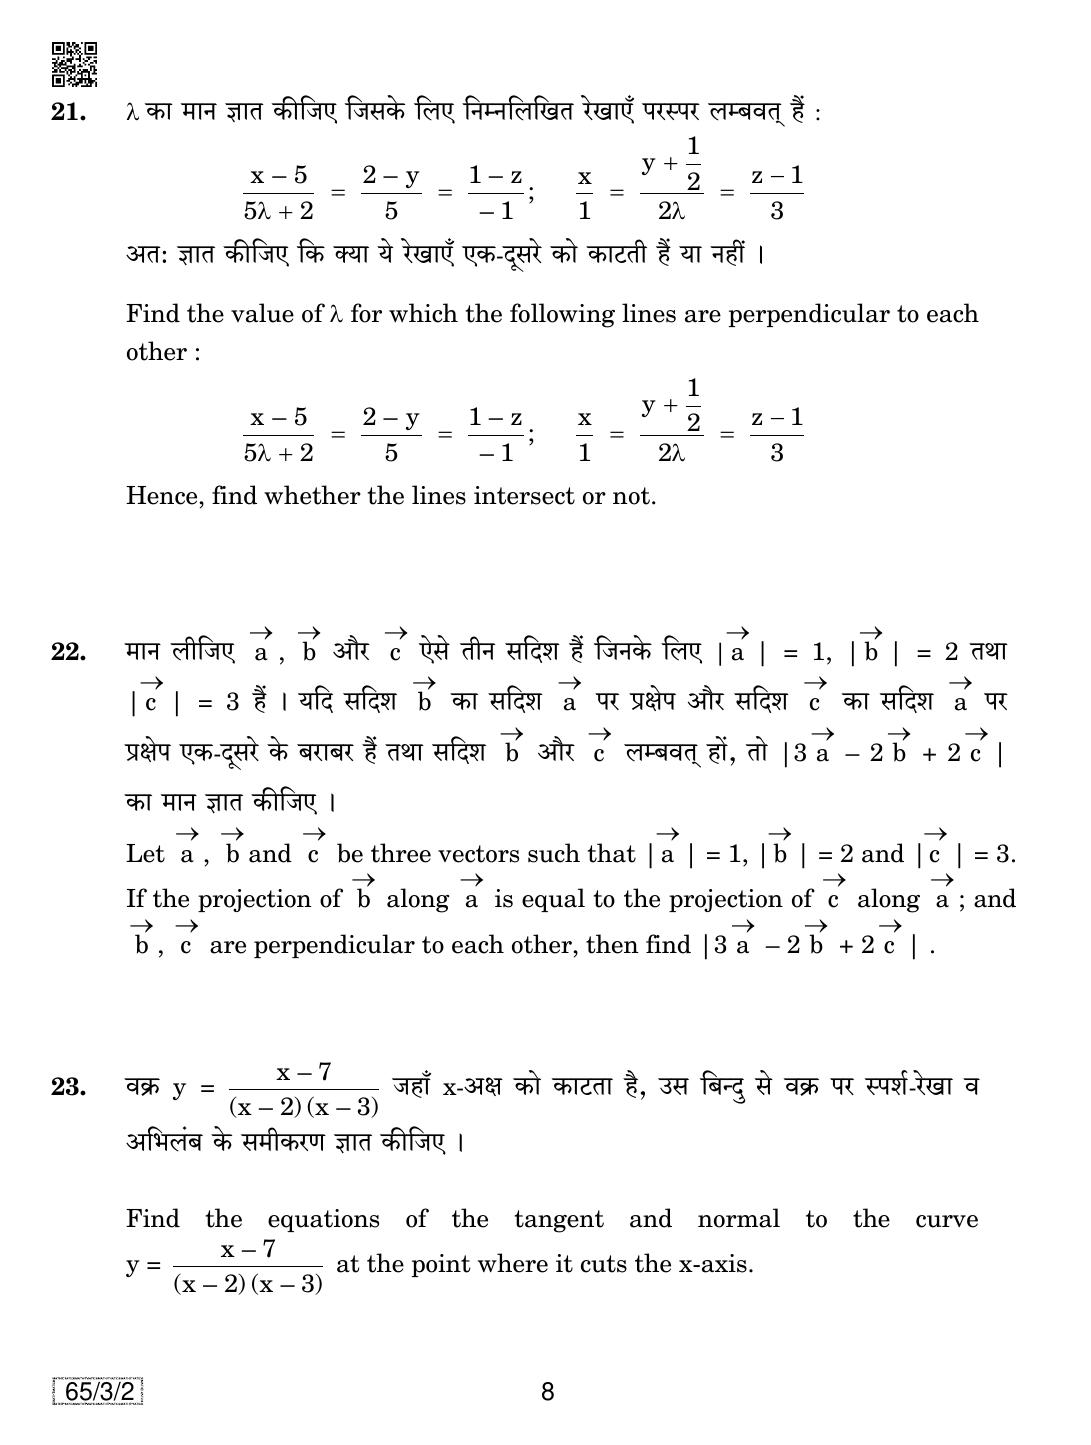 CBSE Class 12 65-3-2 Mathematics 2019 Question Paper - Page 8